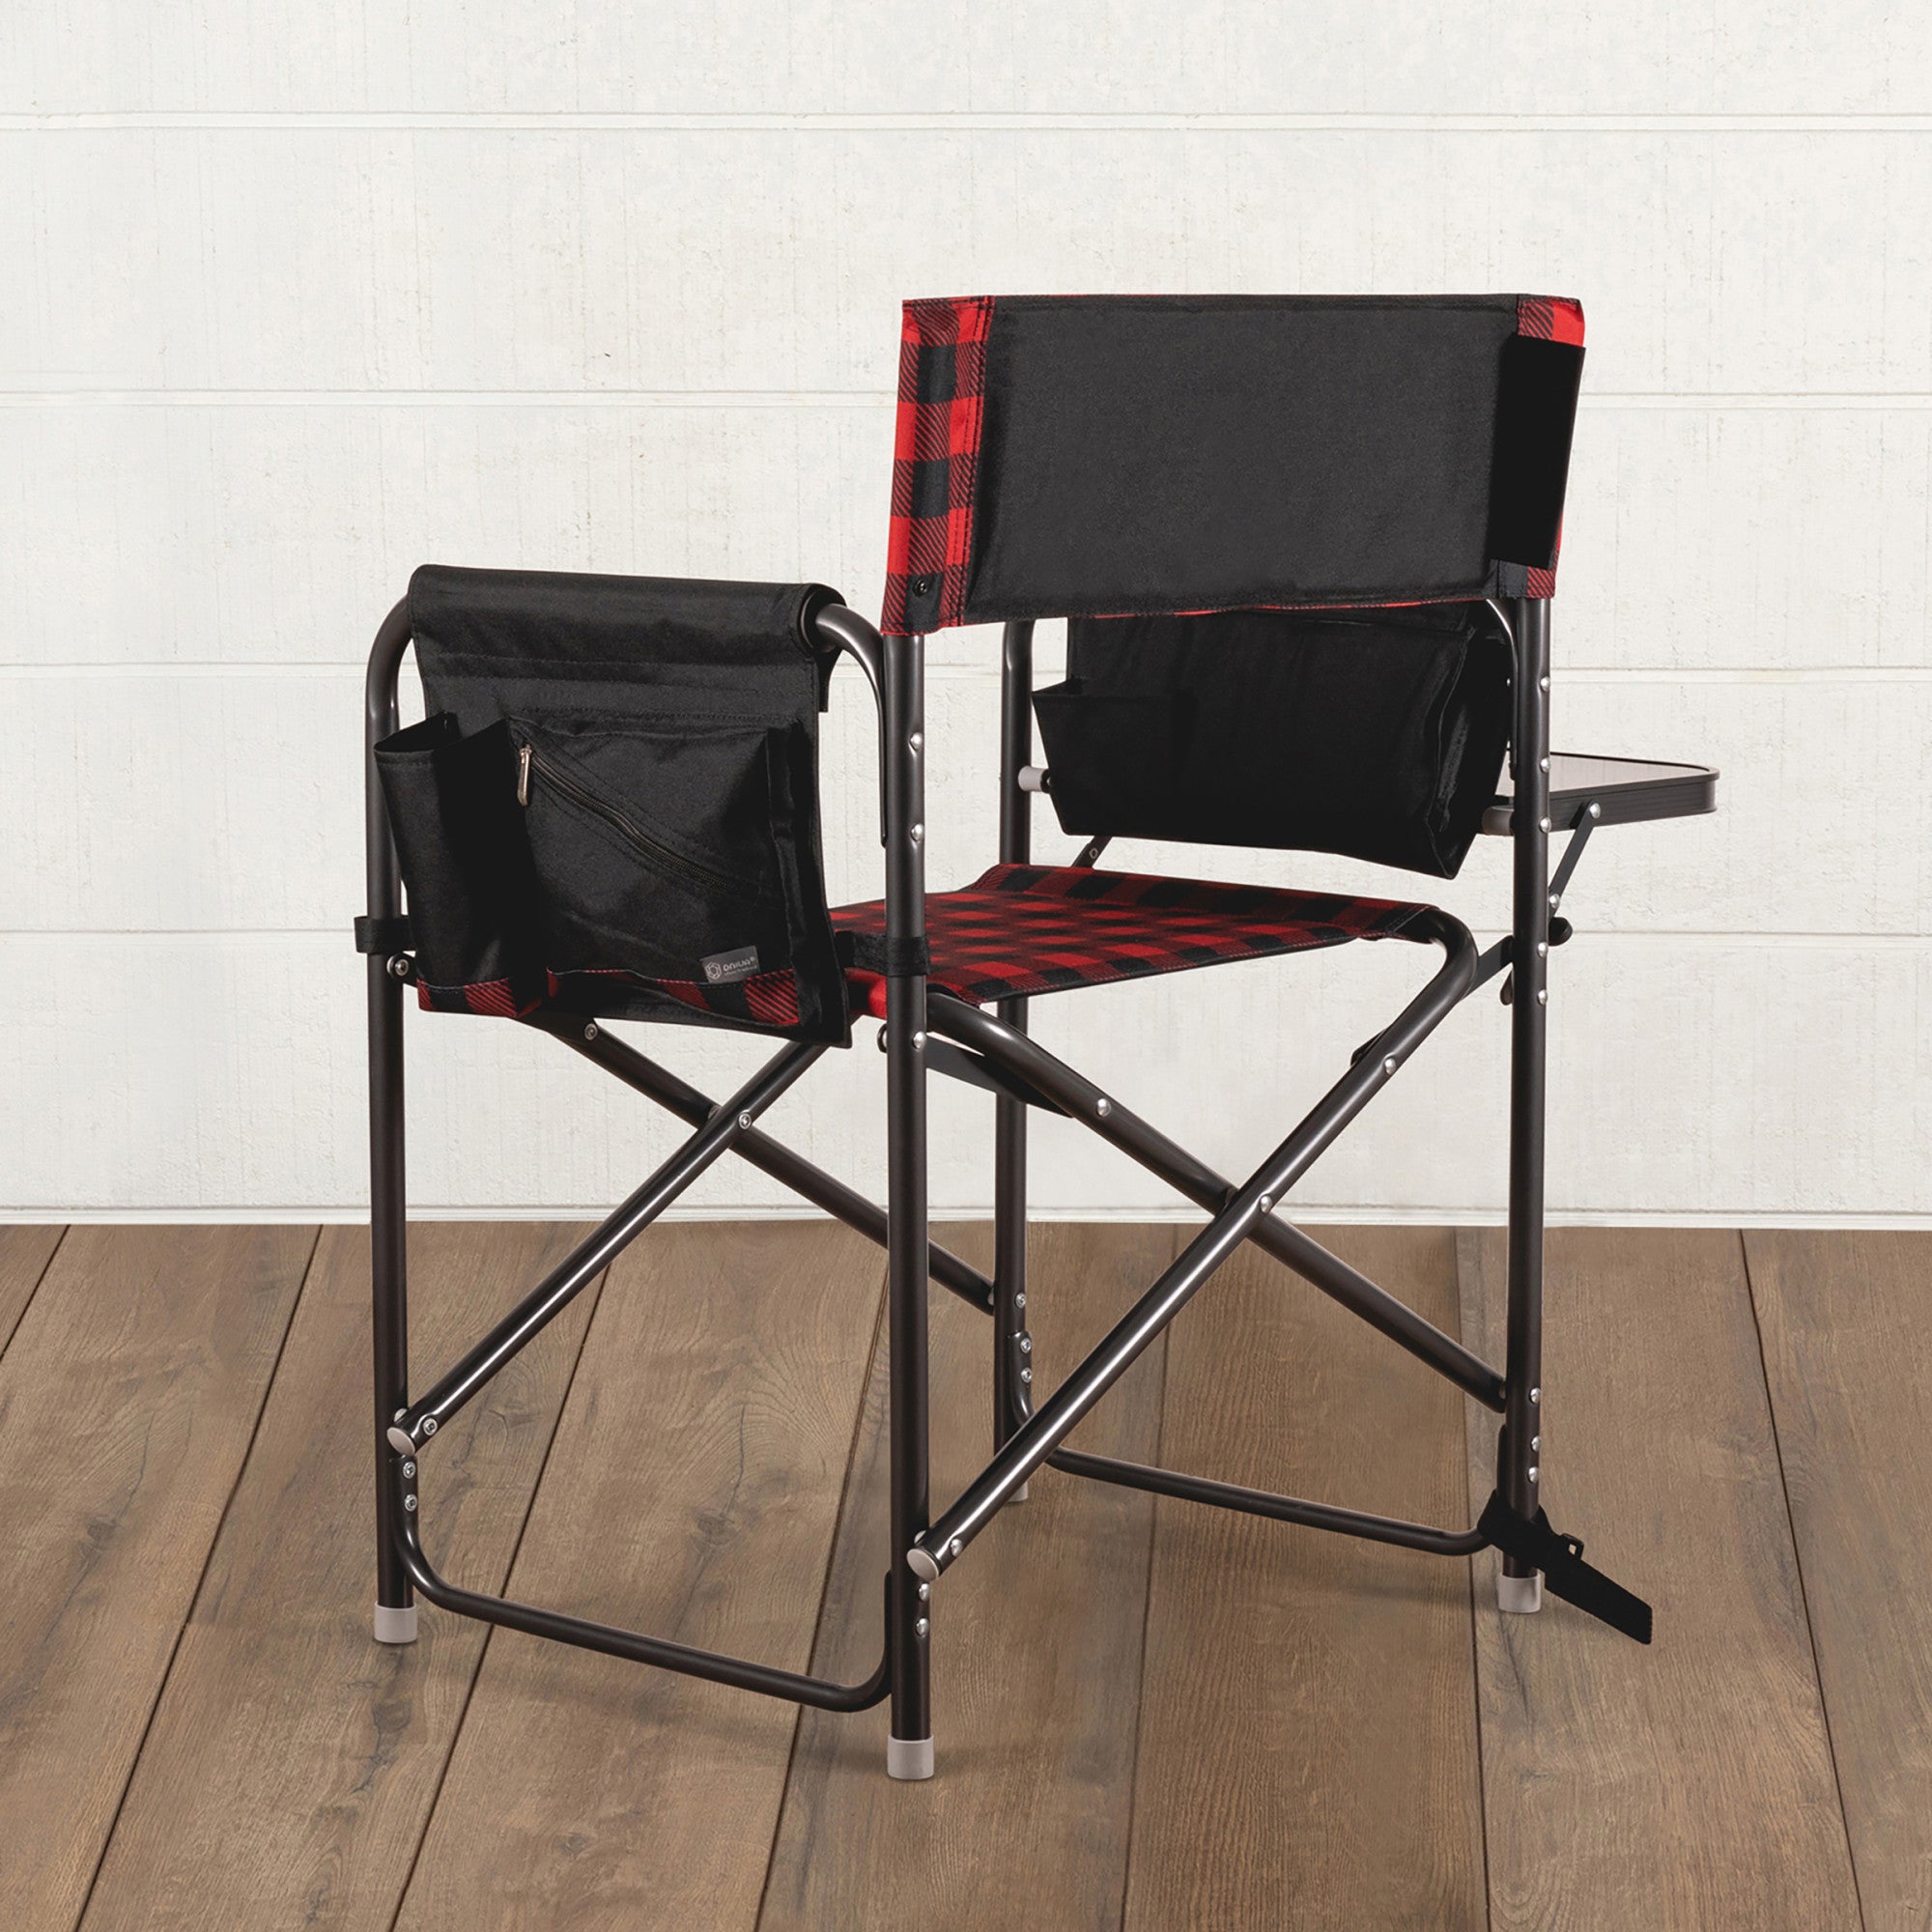 Metal Folding Chair Cushions - Home Furniture Design  Metal folding chairs,  Folding chair, Outdoor folding chairs